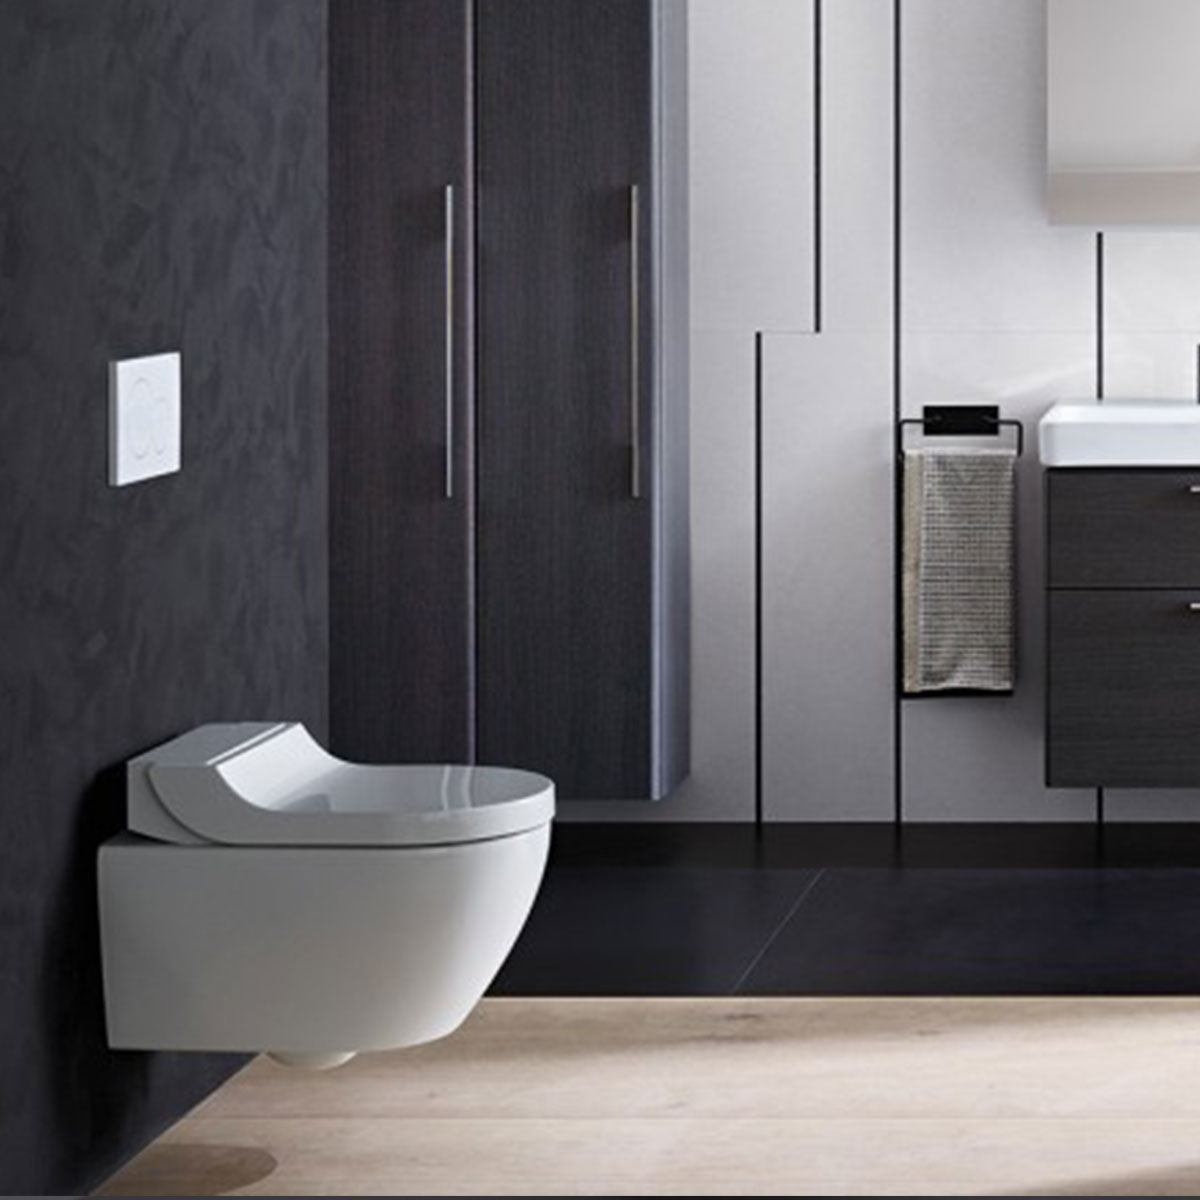 Geberit AquaClean Tuma Comfort Rimless Wall Hung WC Pan With Soft Close Toilet Seat